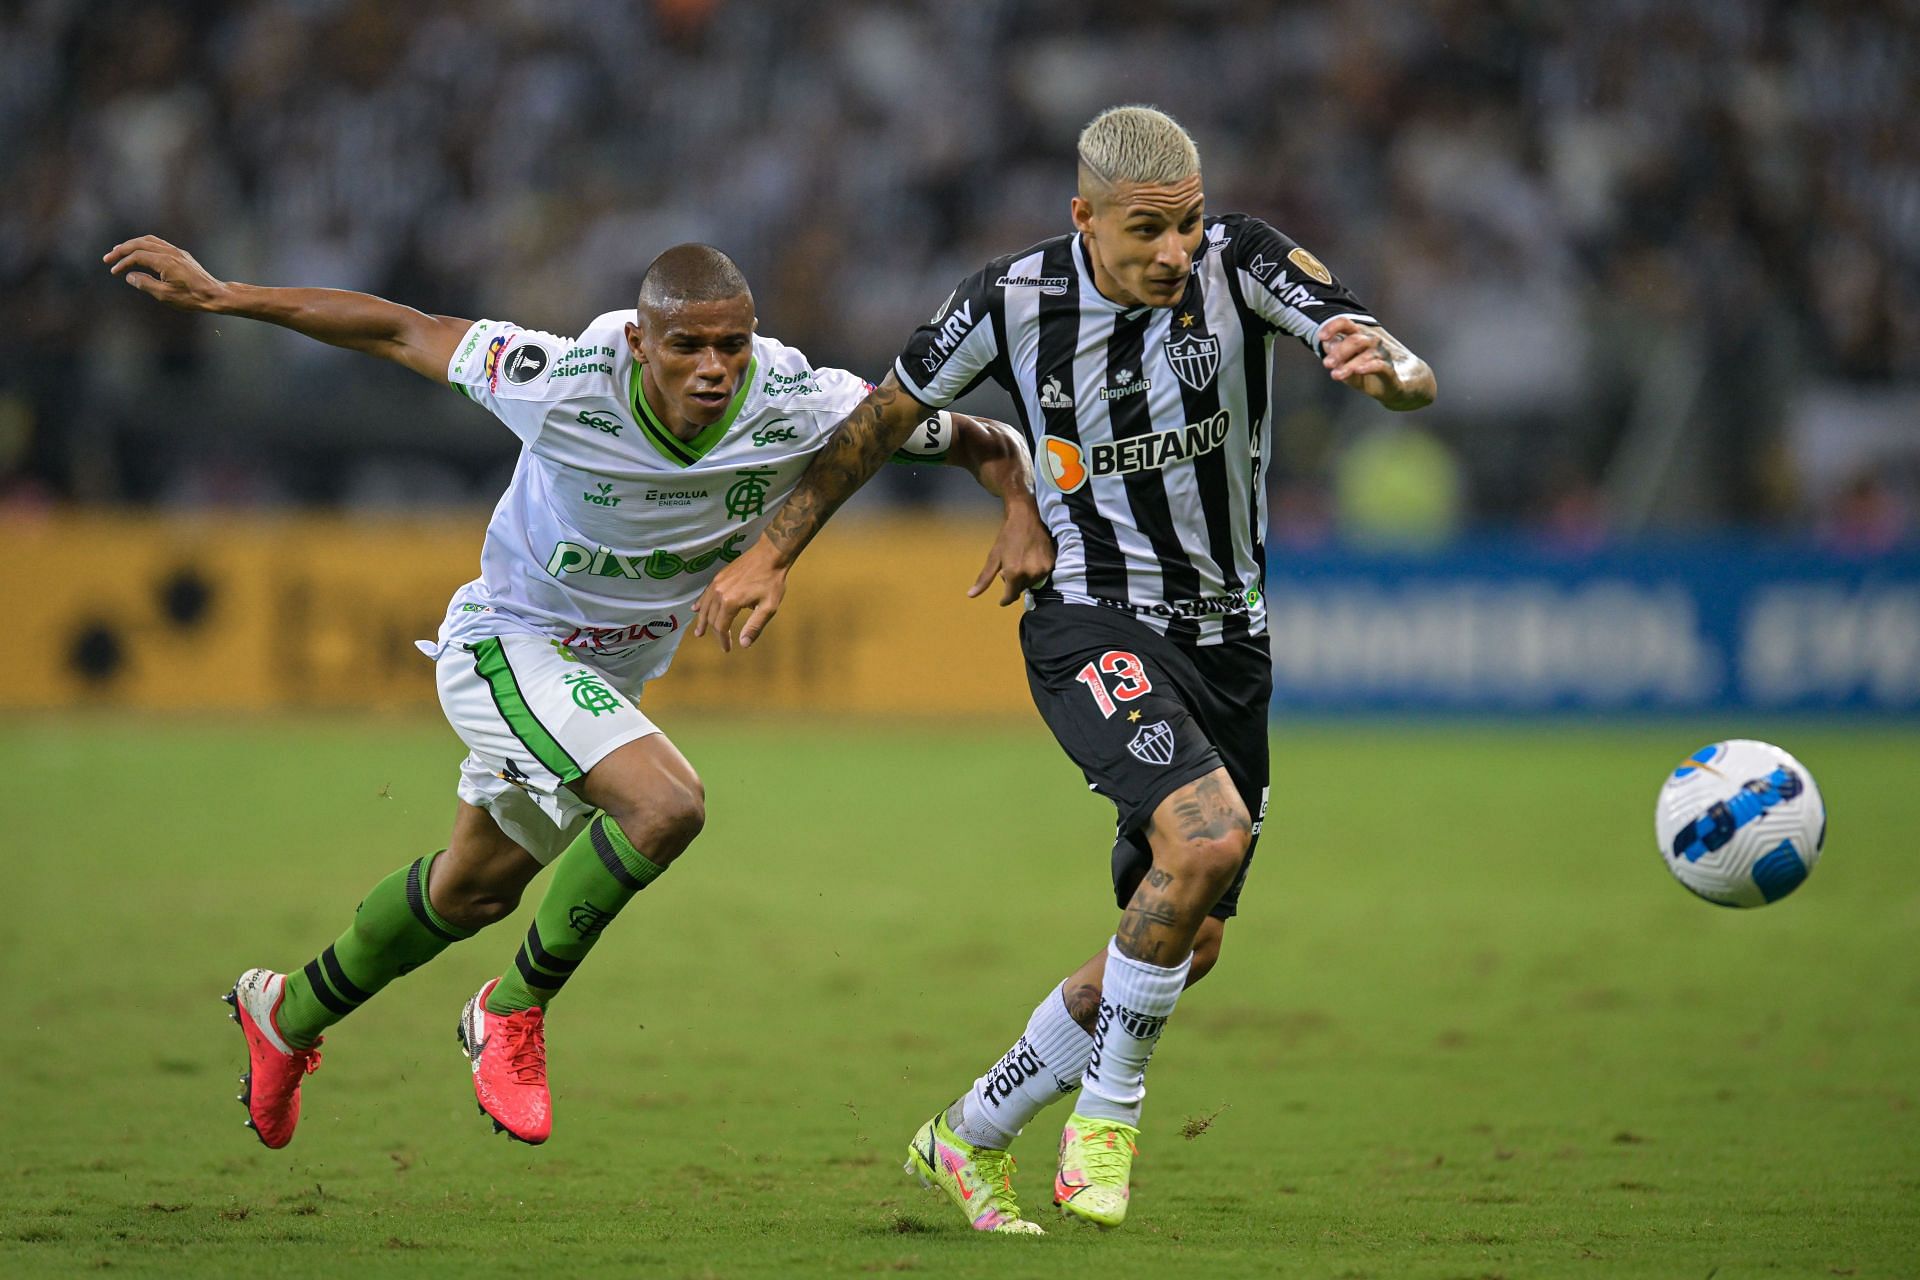 Atletico Mineiro host Cuiaba in their Brazilian Serie A fixture on Friday